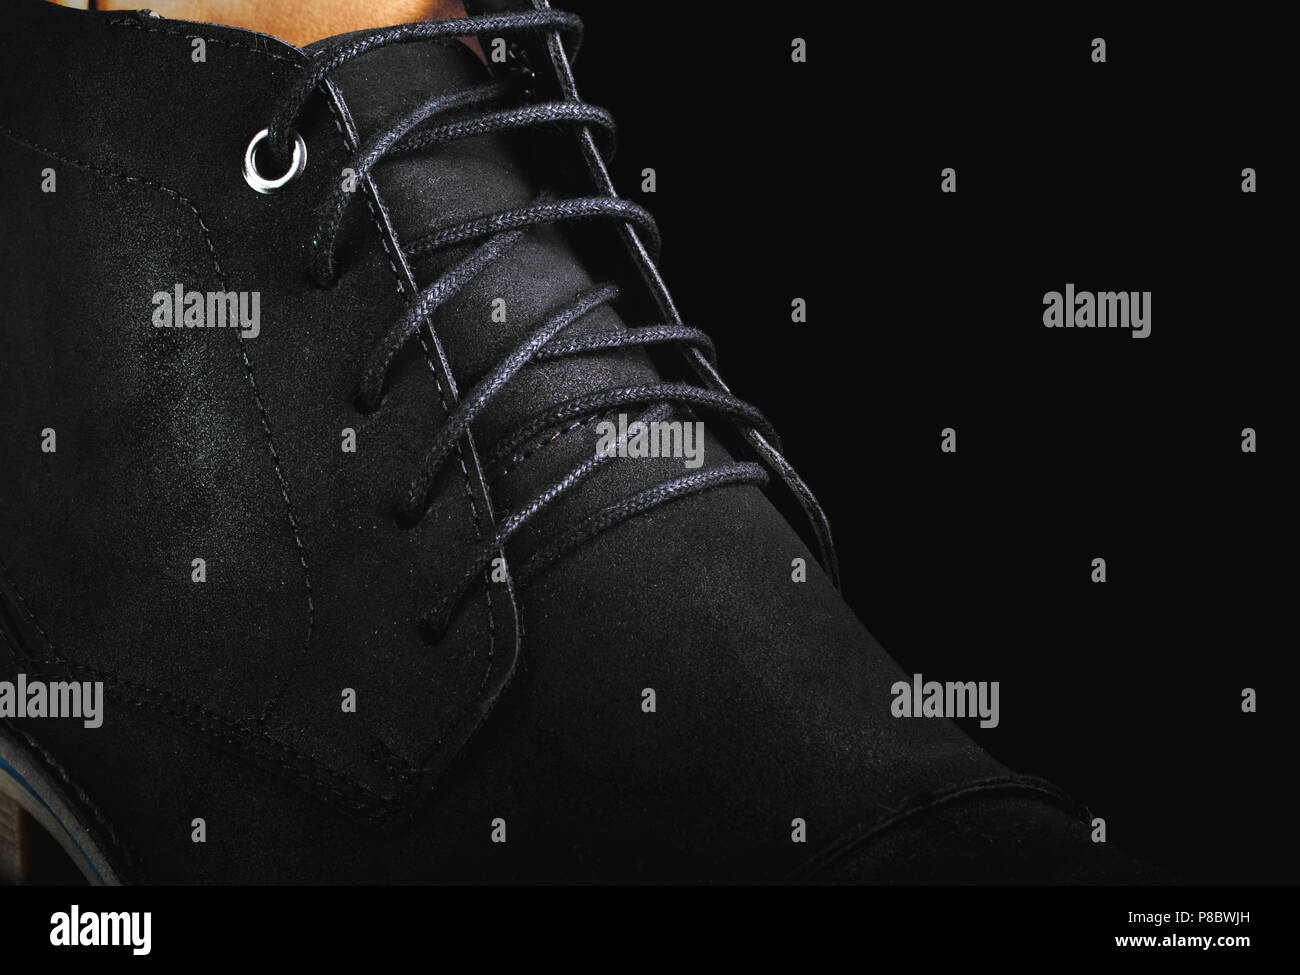 Men's black leather boots shoes laces closeup macro, black background low key Stock Photo